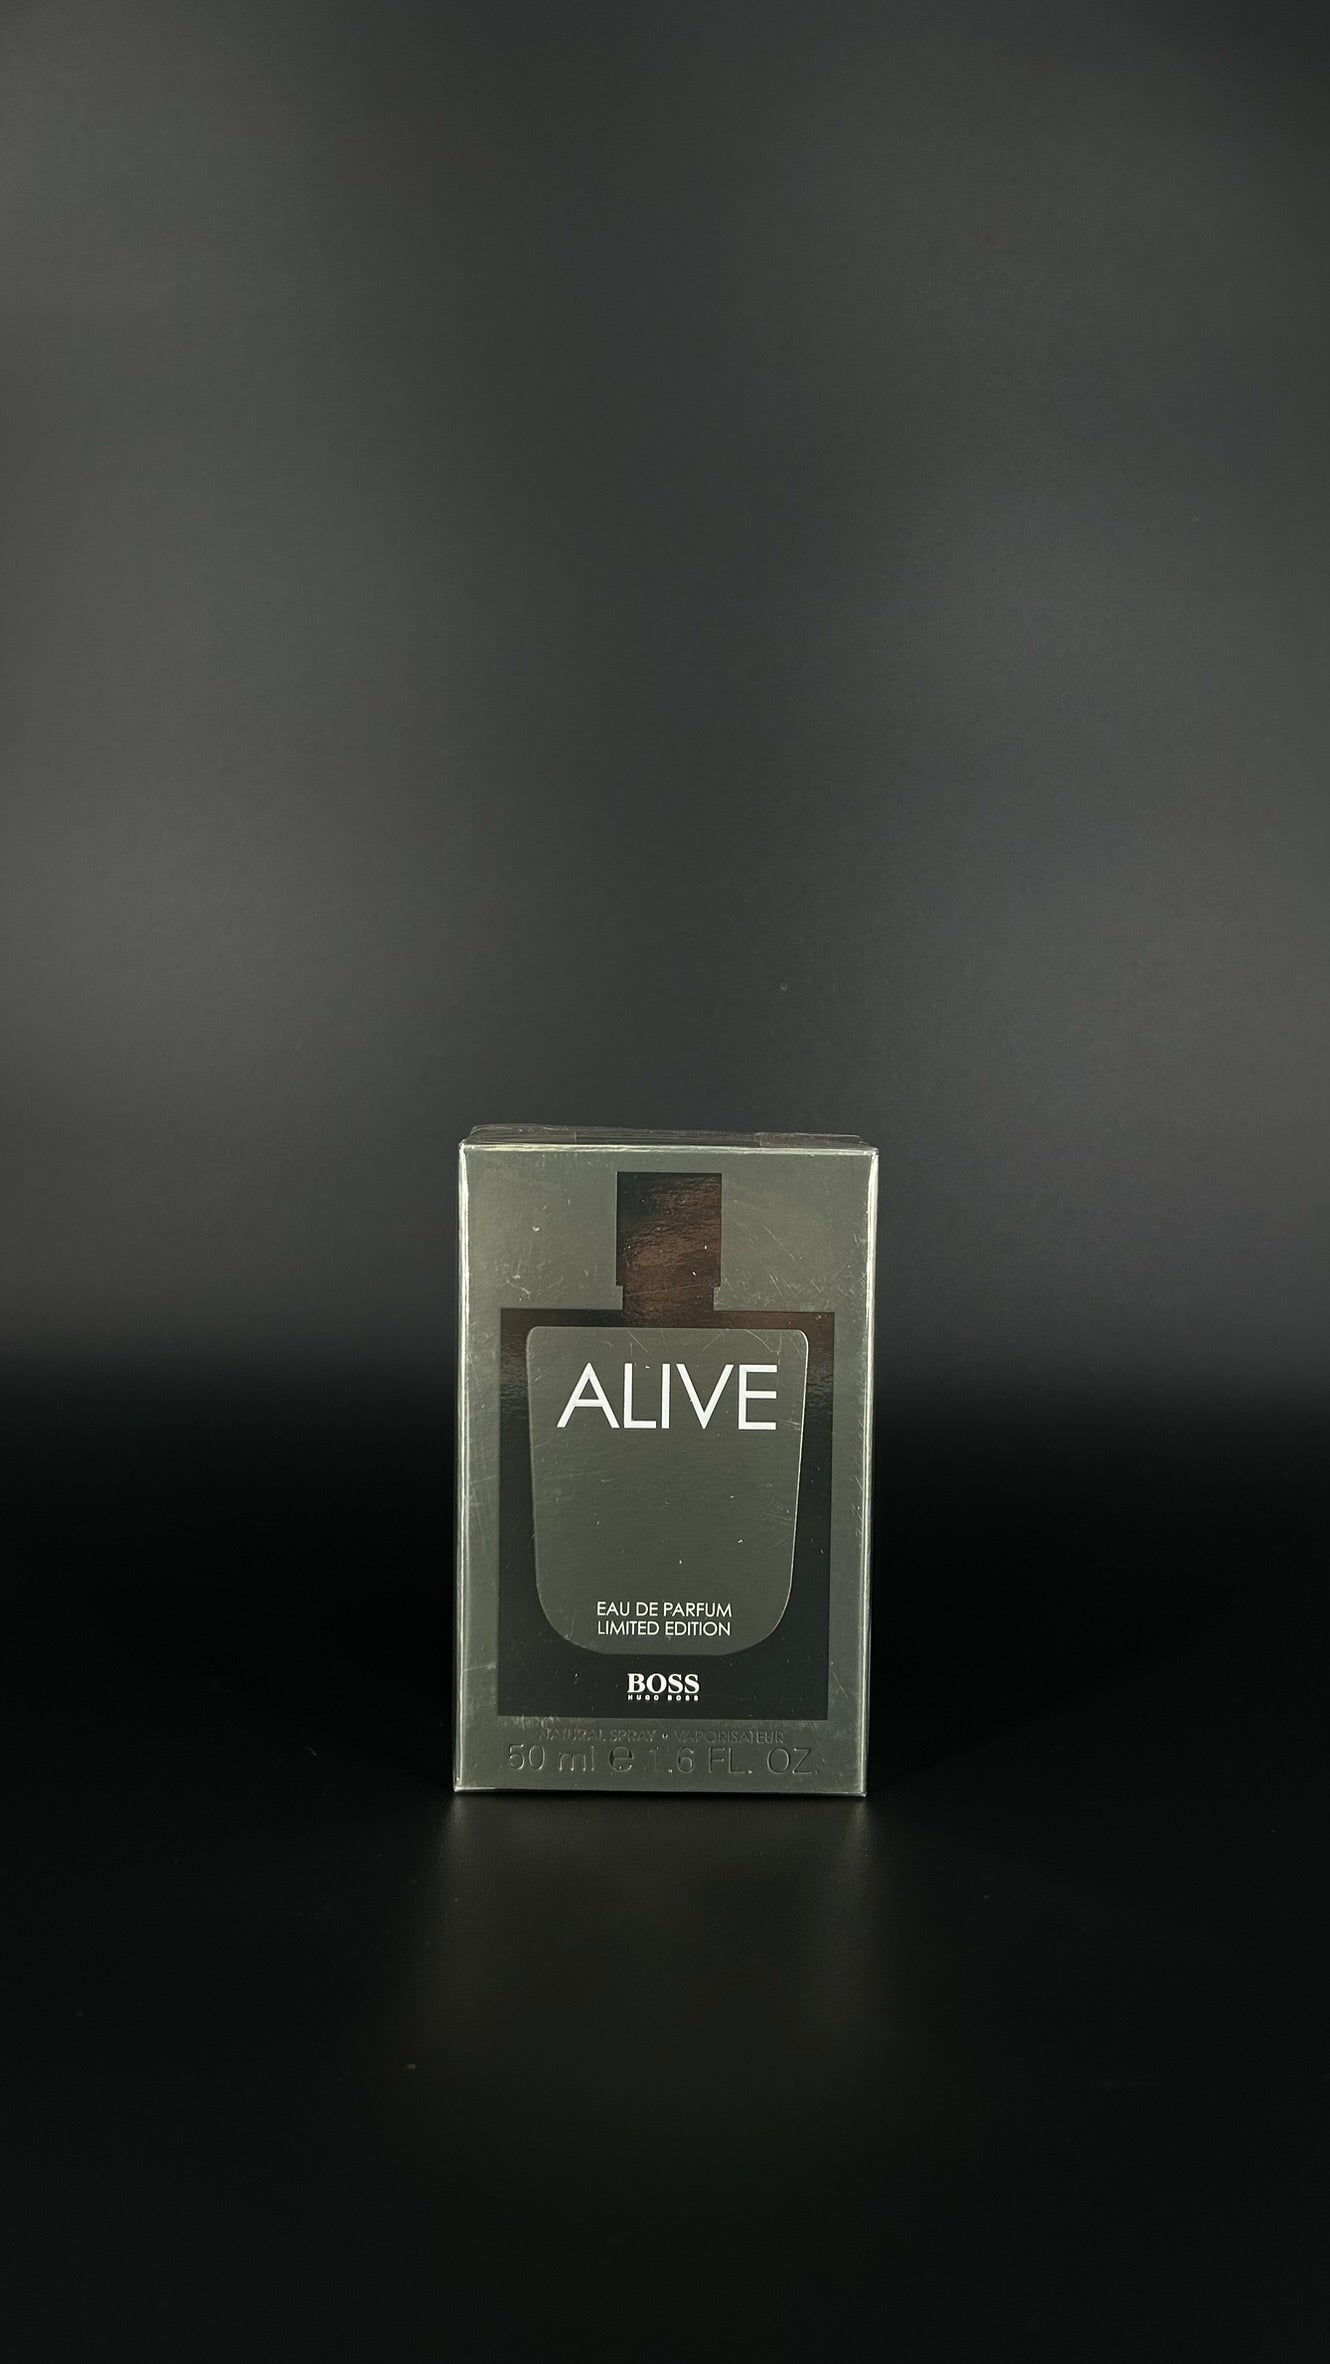 Hugo Boss Alive 50ml EDP Limited Edition